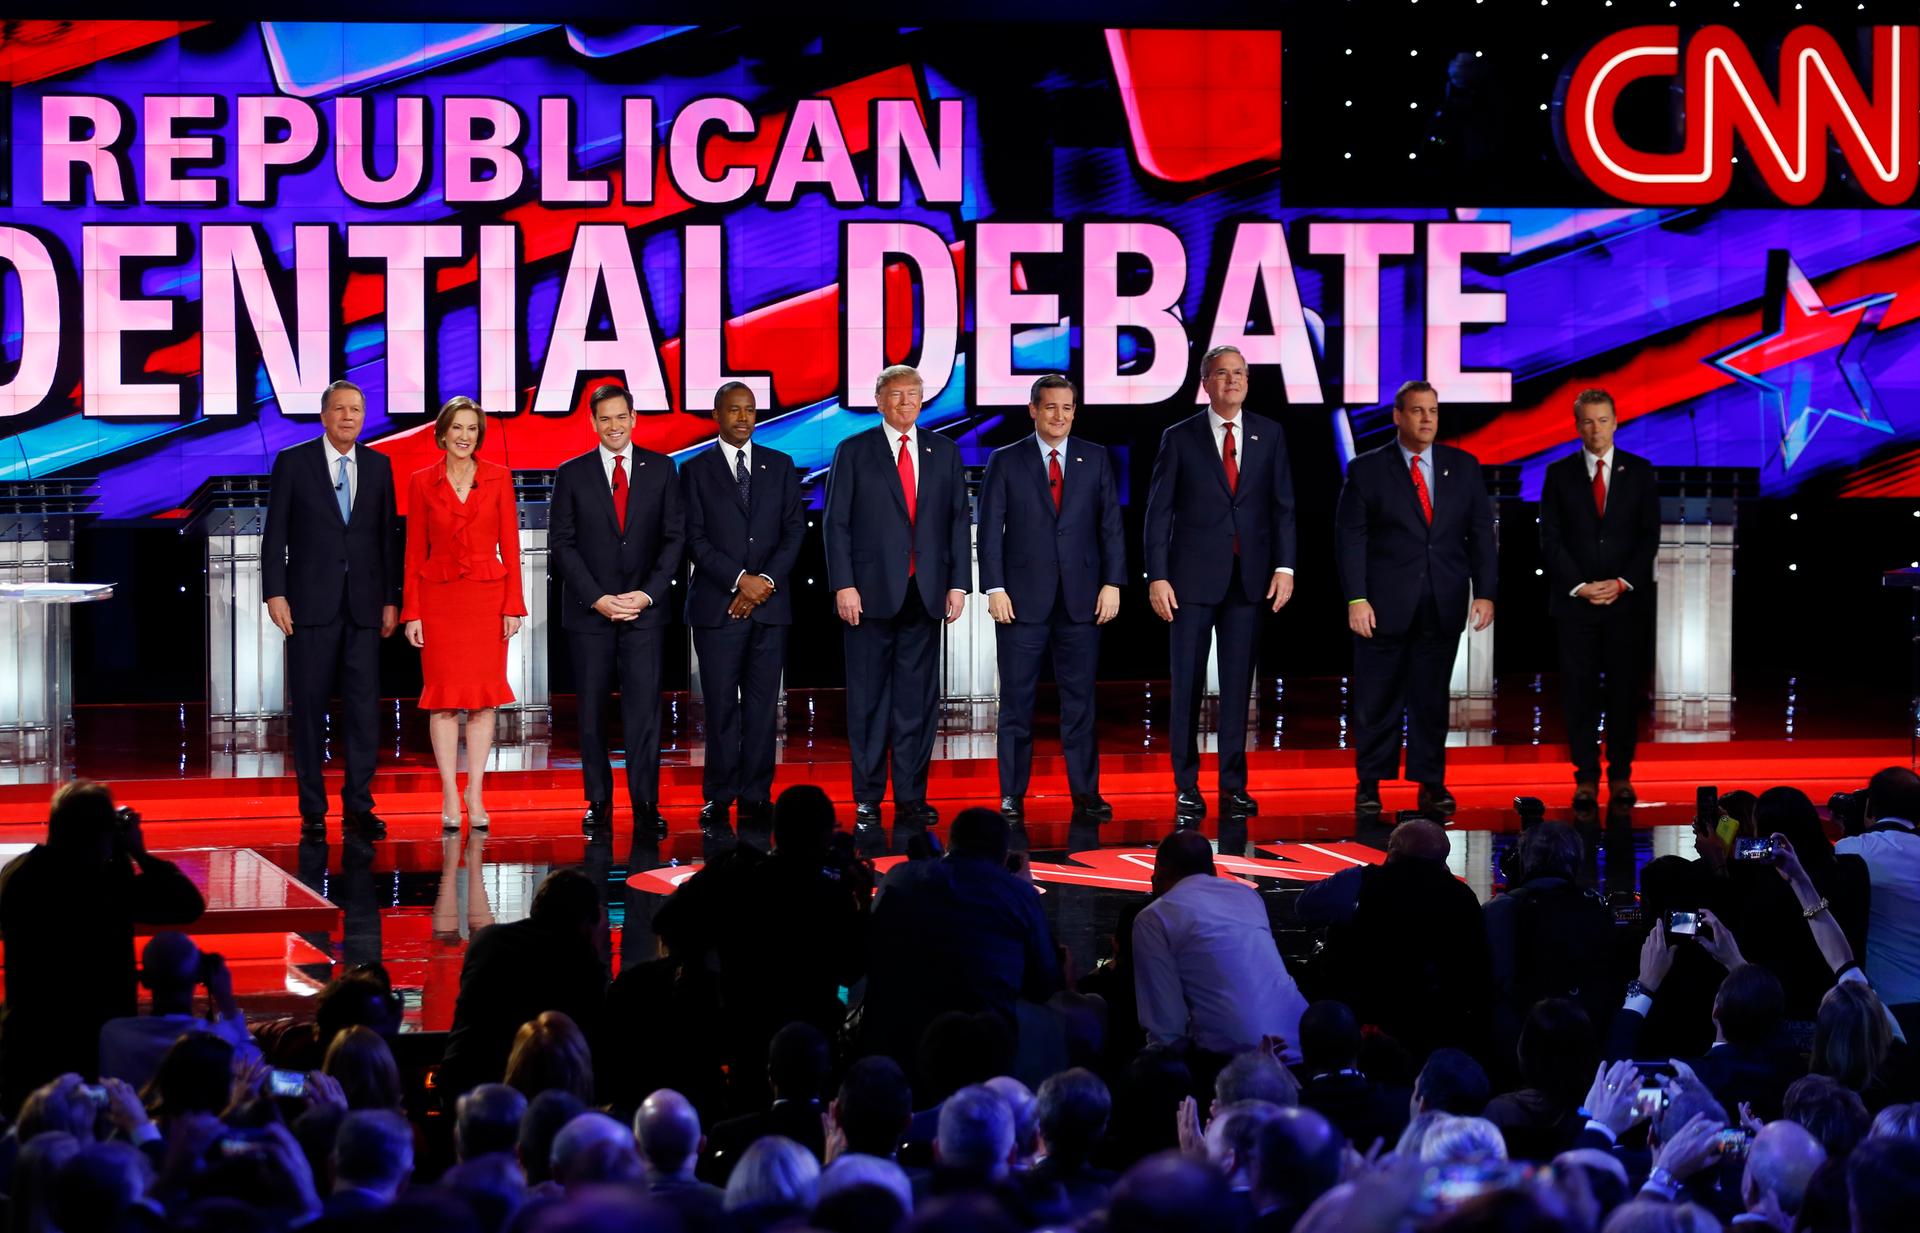 John Kasich, Carly Fiorina, Marco Rubio, Ben Carson, Donald Trump, Ted Cruz, Jeb Bush, Chris Christie and Rand Paul (L-R) pose before the start of the debate.